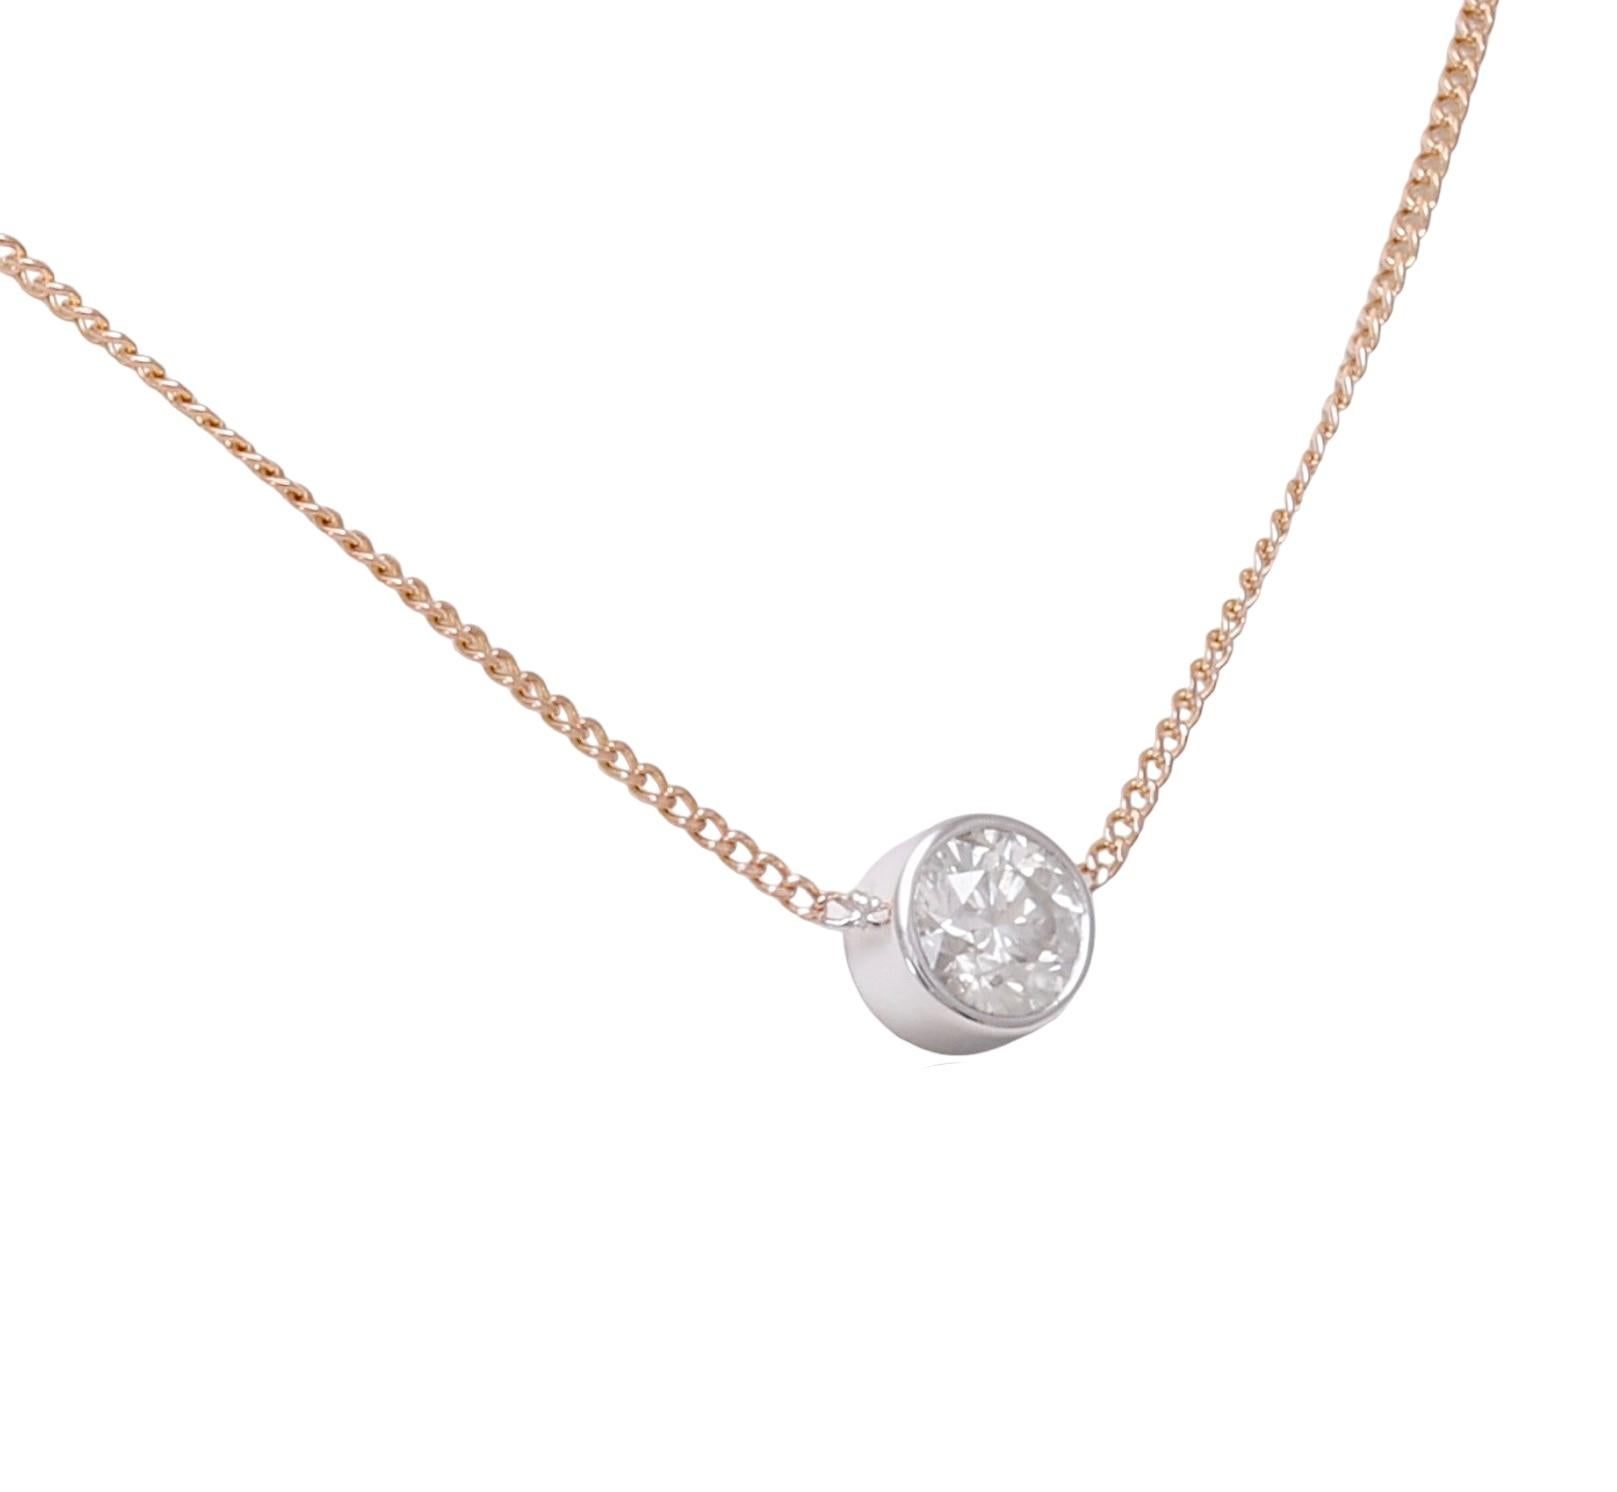 IGi Certified 18 kt. Gold Diamond Pendant Choker Necklace with 1.06 ct. Diamond For Sale 5